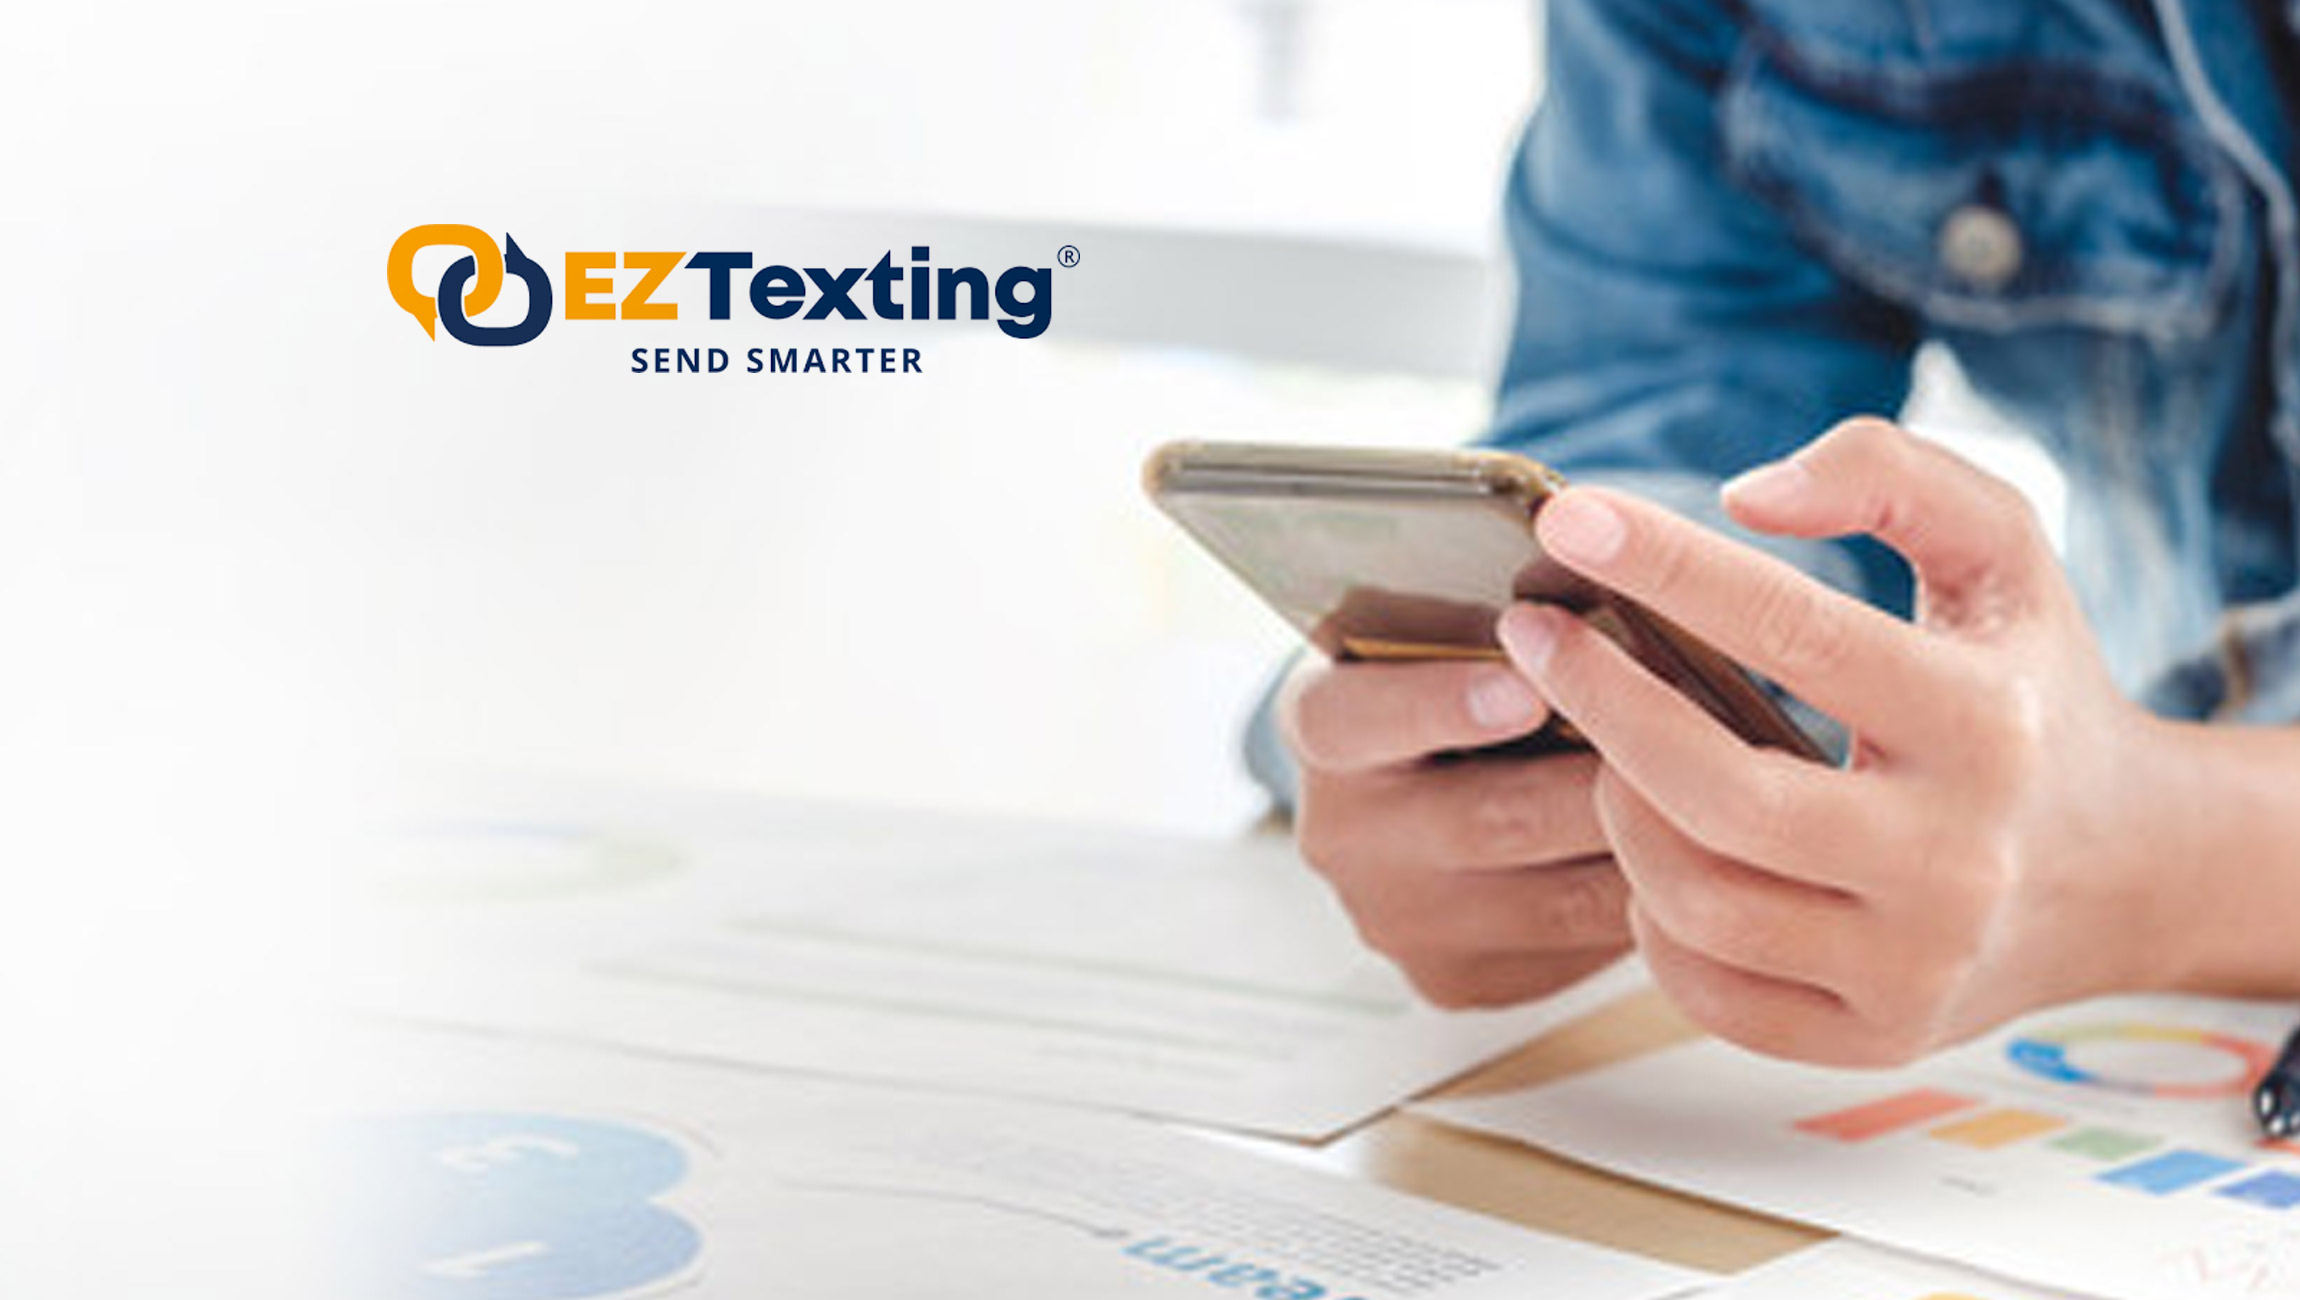 SMS Marketing Leader EZ Texting Joins Mobile Ecosystem Forum 1